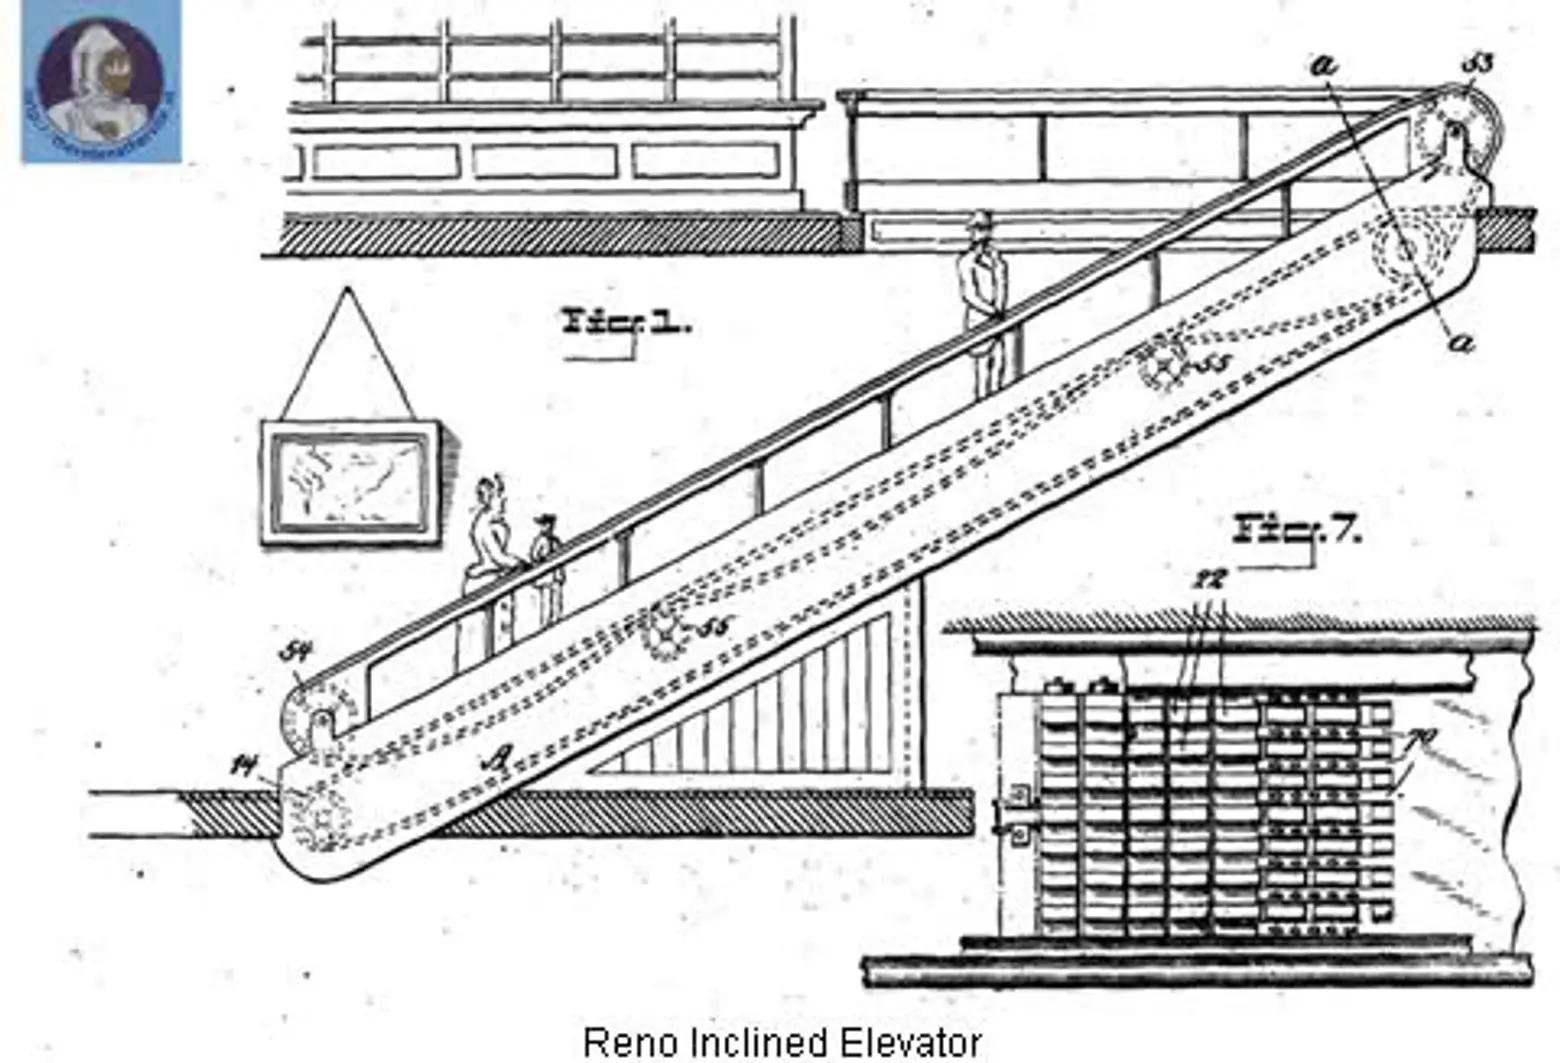 Jesse Reno Inclined Elevator, worlds first escalator at coney island by jesse w. reno